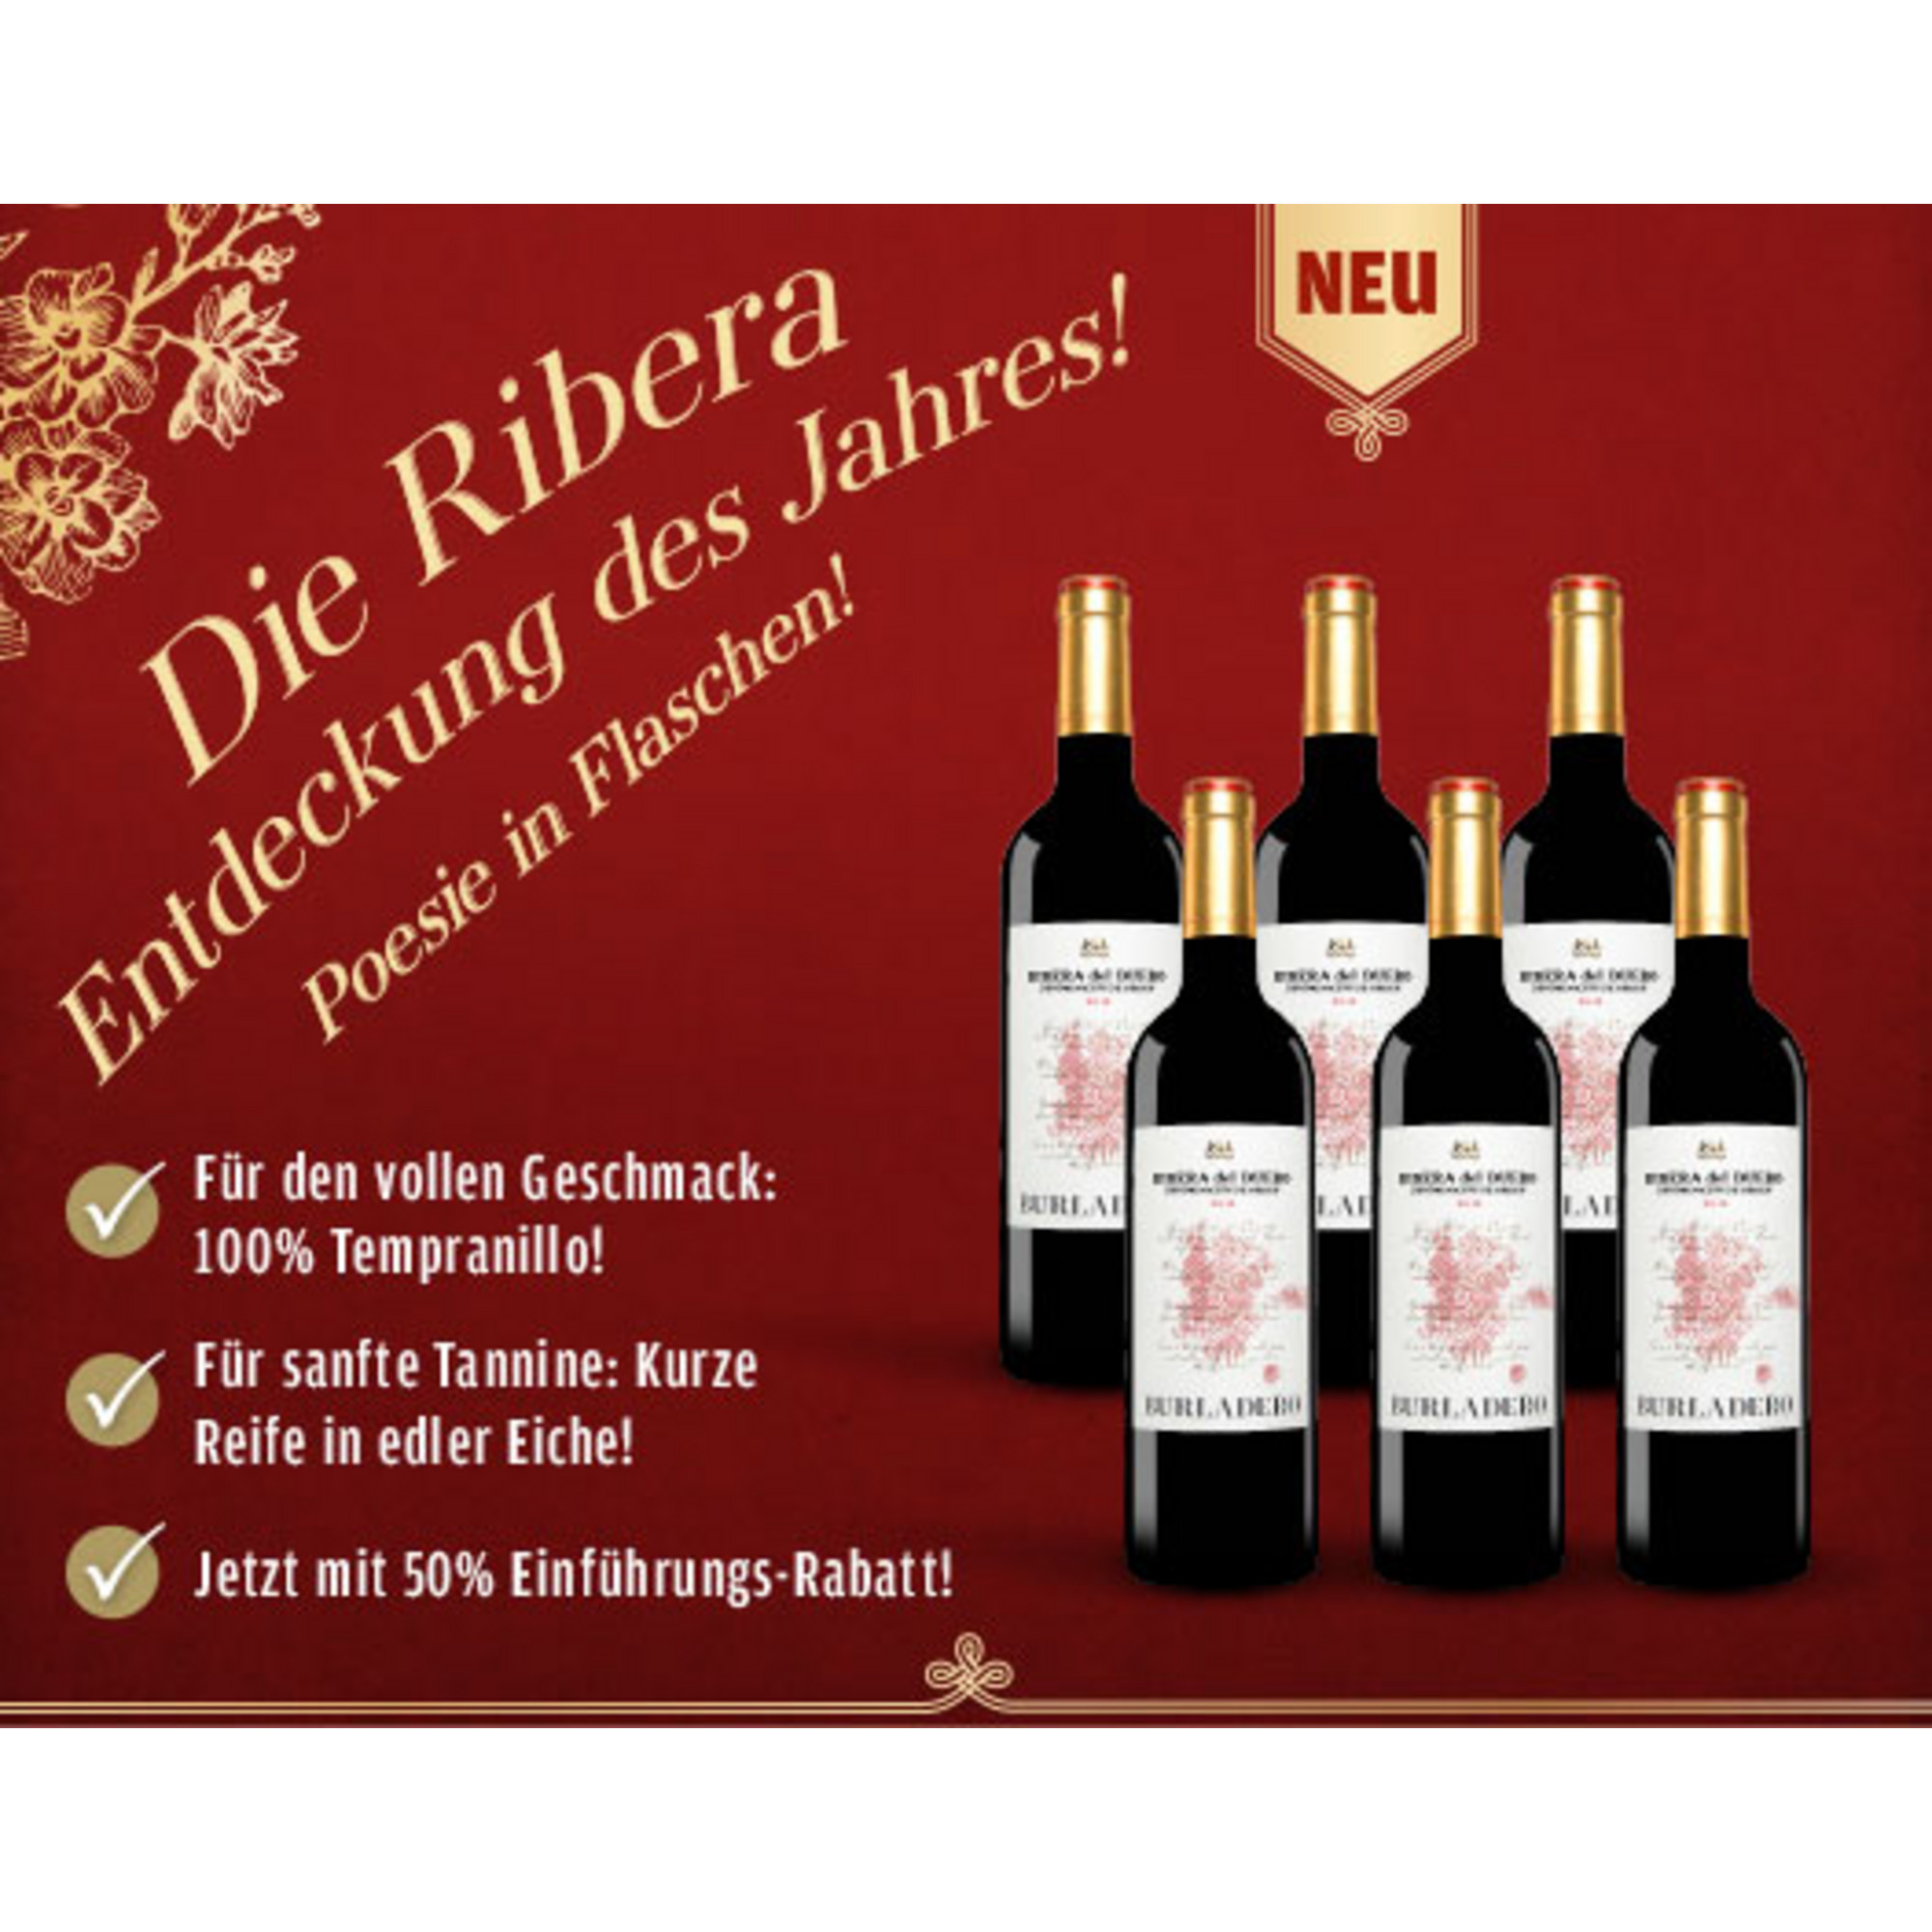 Burladero 2015 - 6er E*Special November 2016  4.5L 14% Vol. Trocken Weinpaket aus Spanien 21354 vinos DE